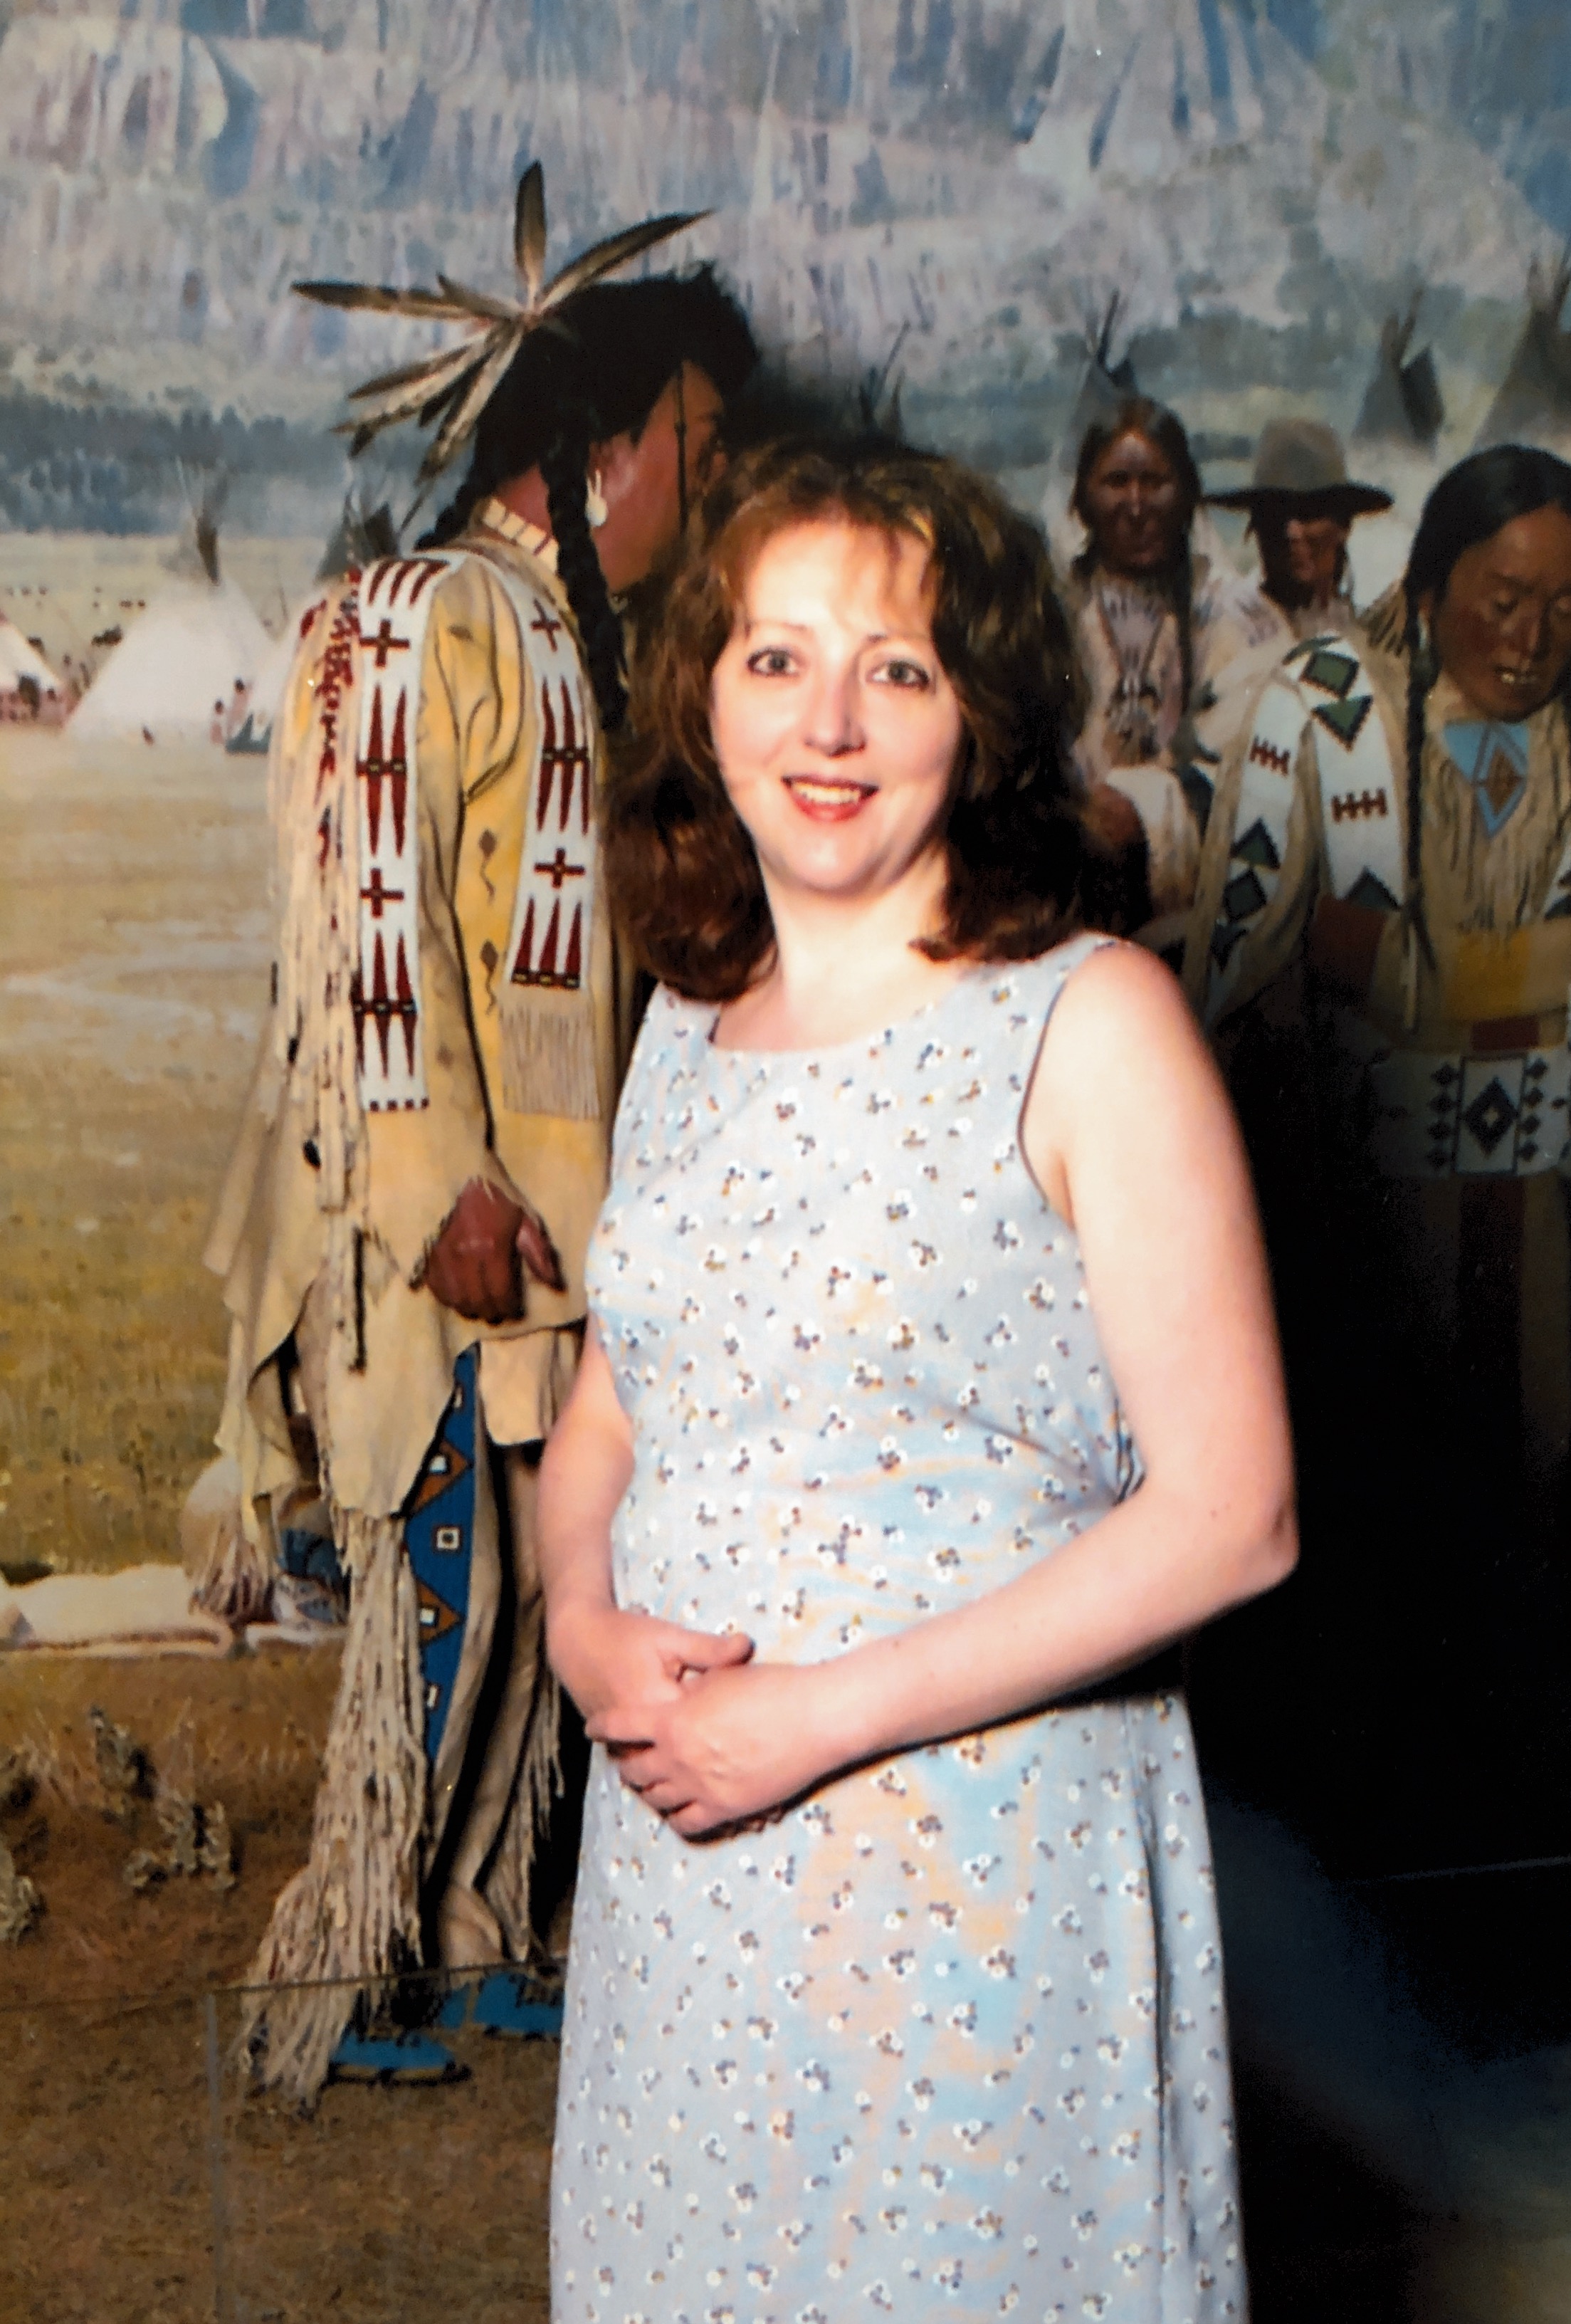 Veronica at the Former Royal Alberta Museum in 1998